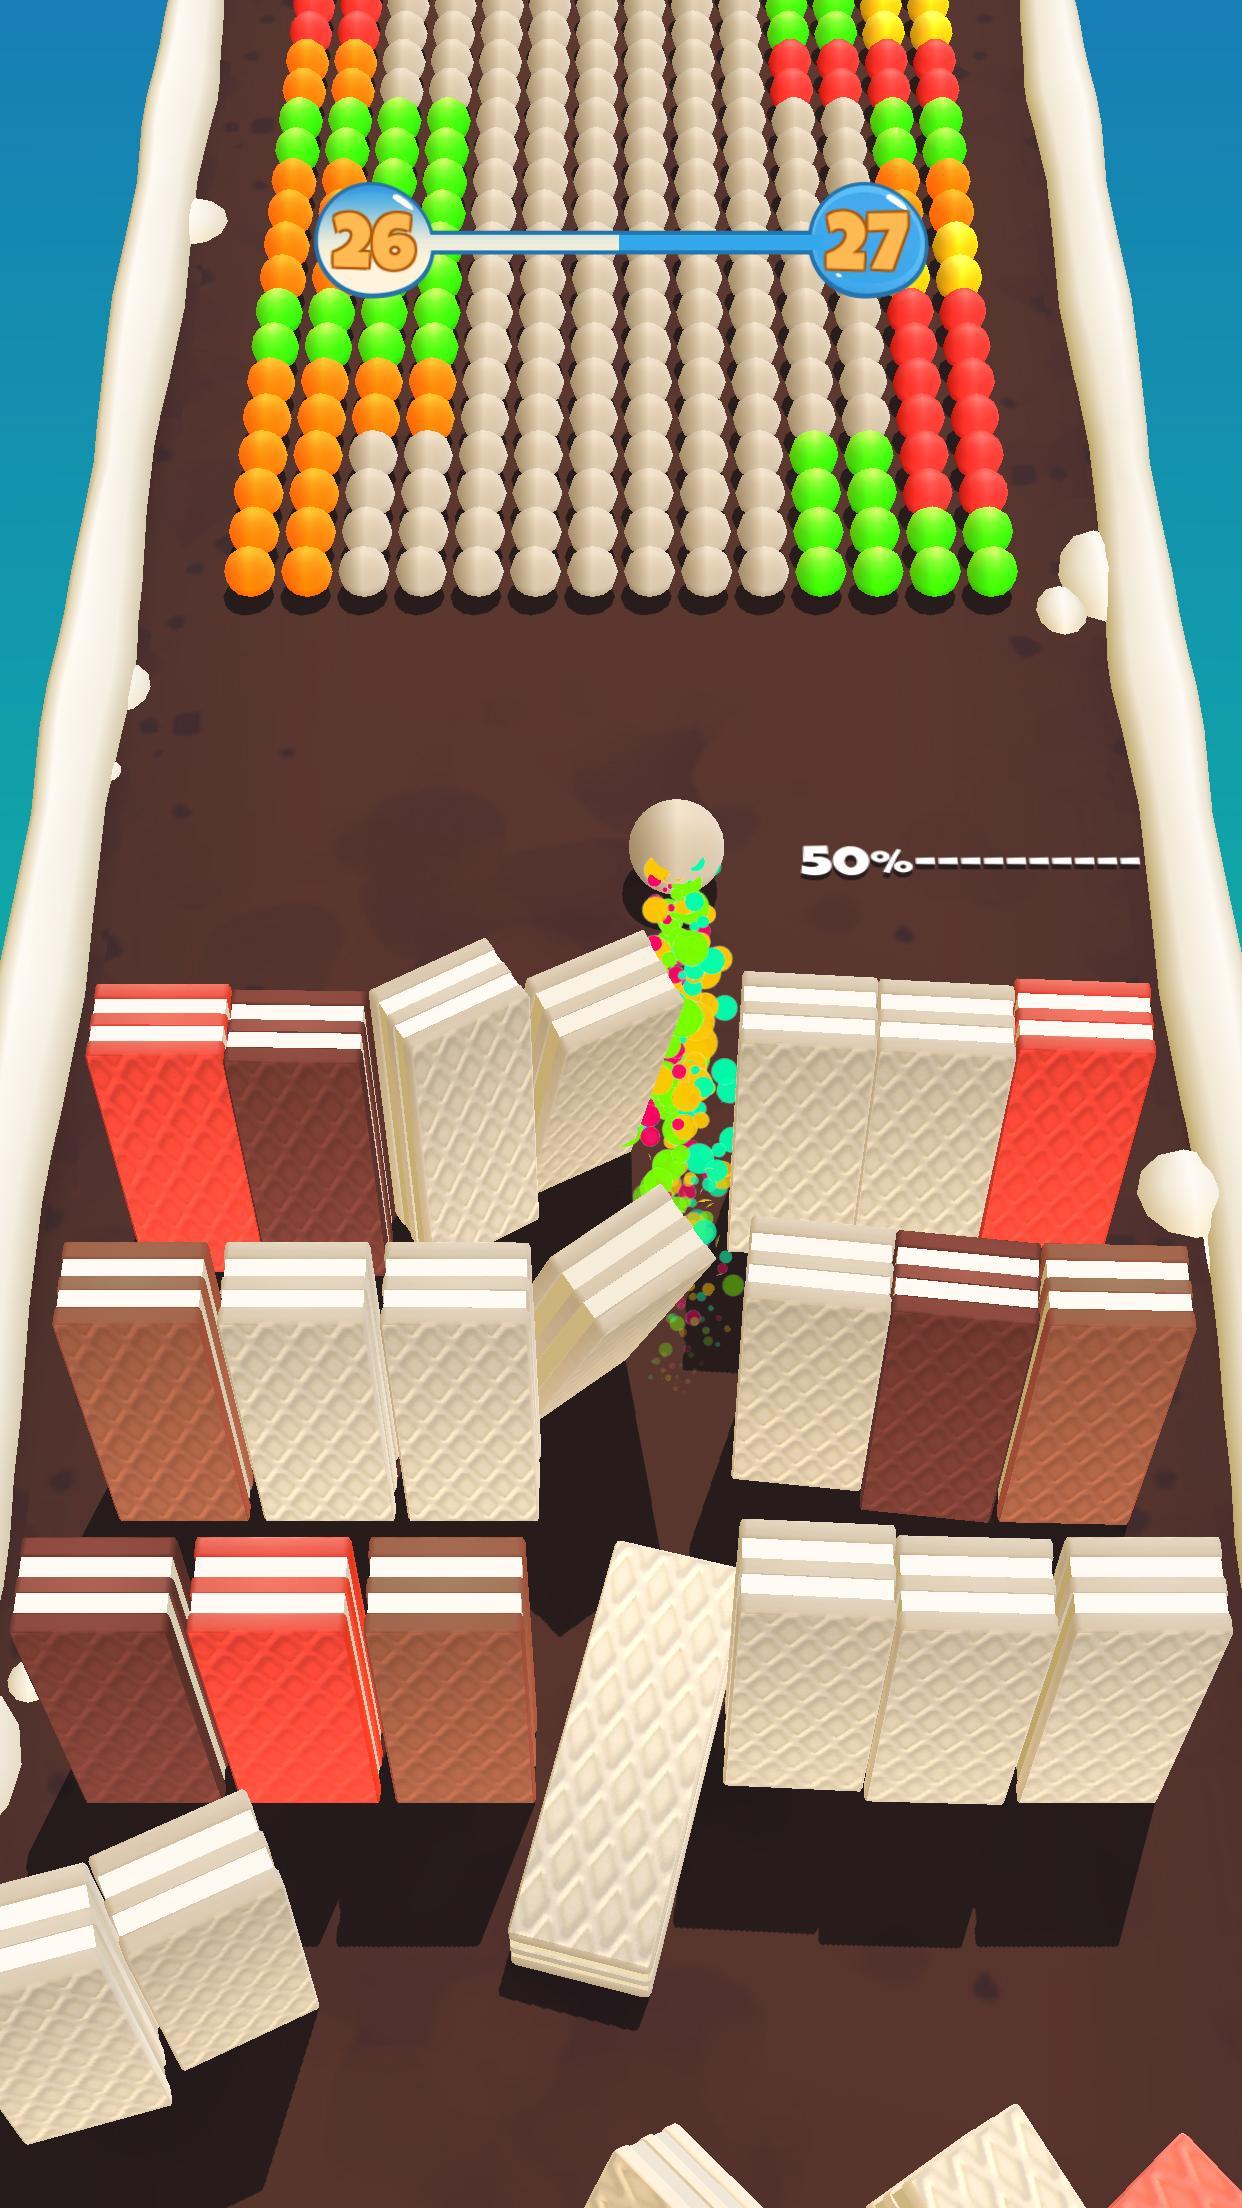 Push'n'Roll screenshot game